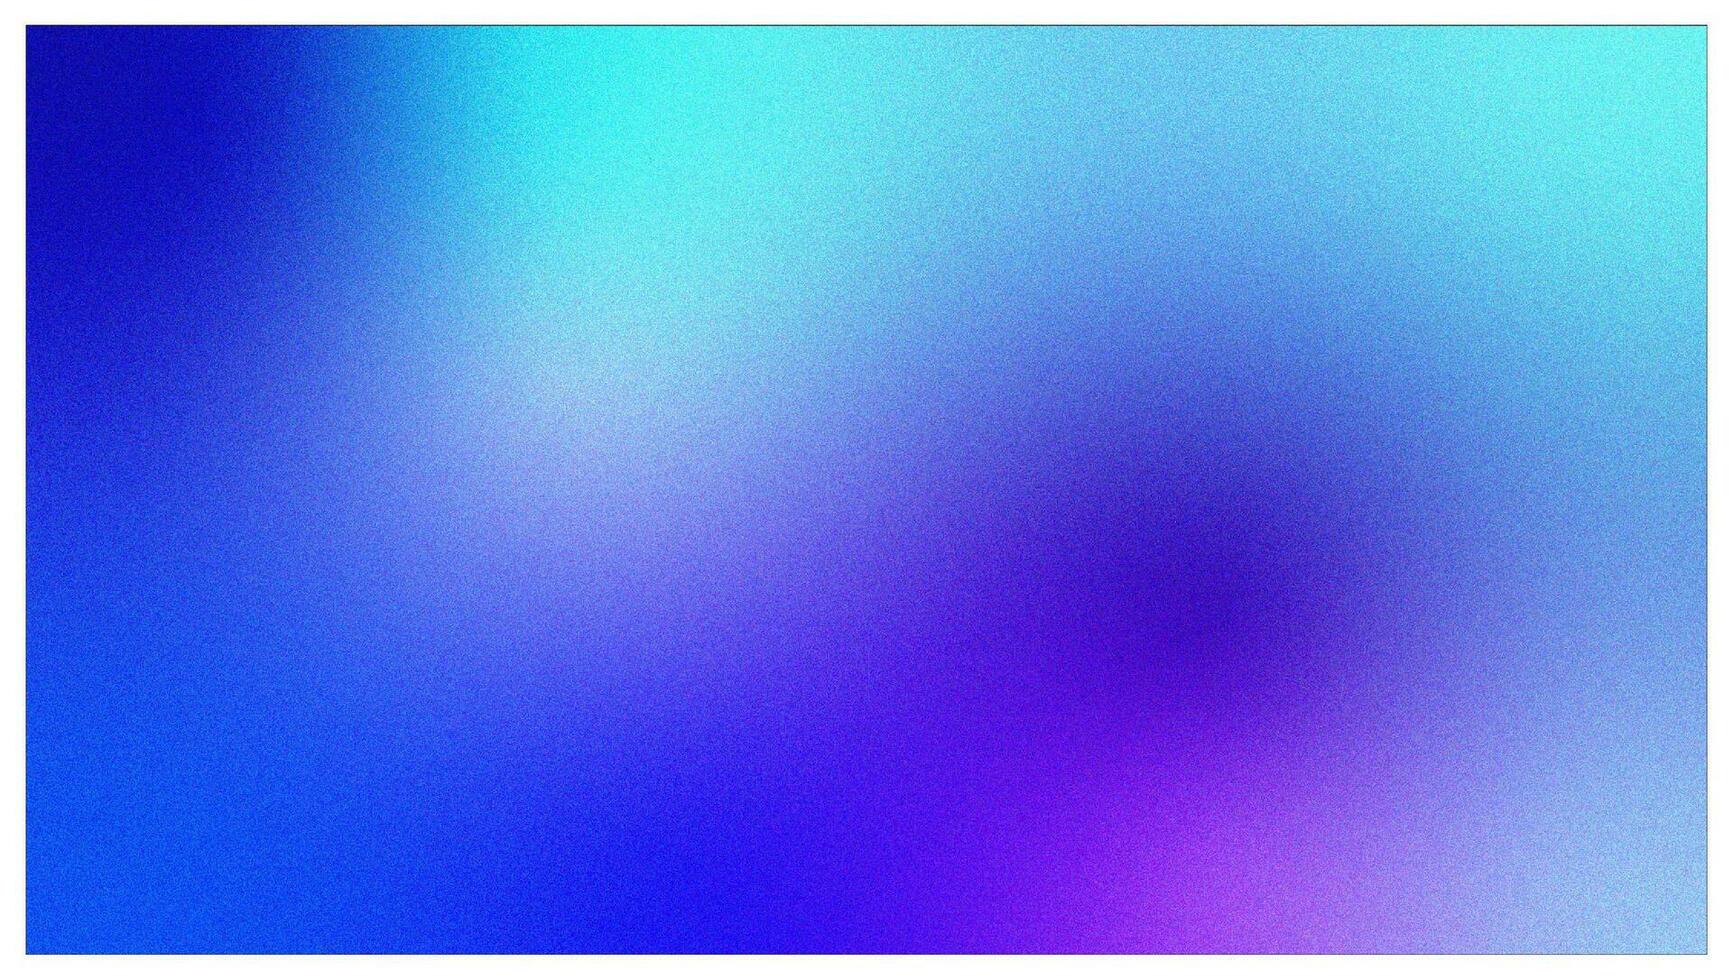 Blau Gradient mit Korn Textur Hintergrund, körnig Gradient Hintergrund, Blau Farbe Hintergrund mit Lärm Textur vektor